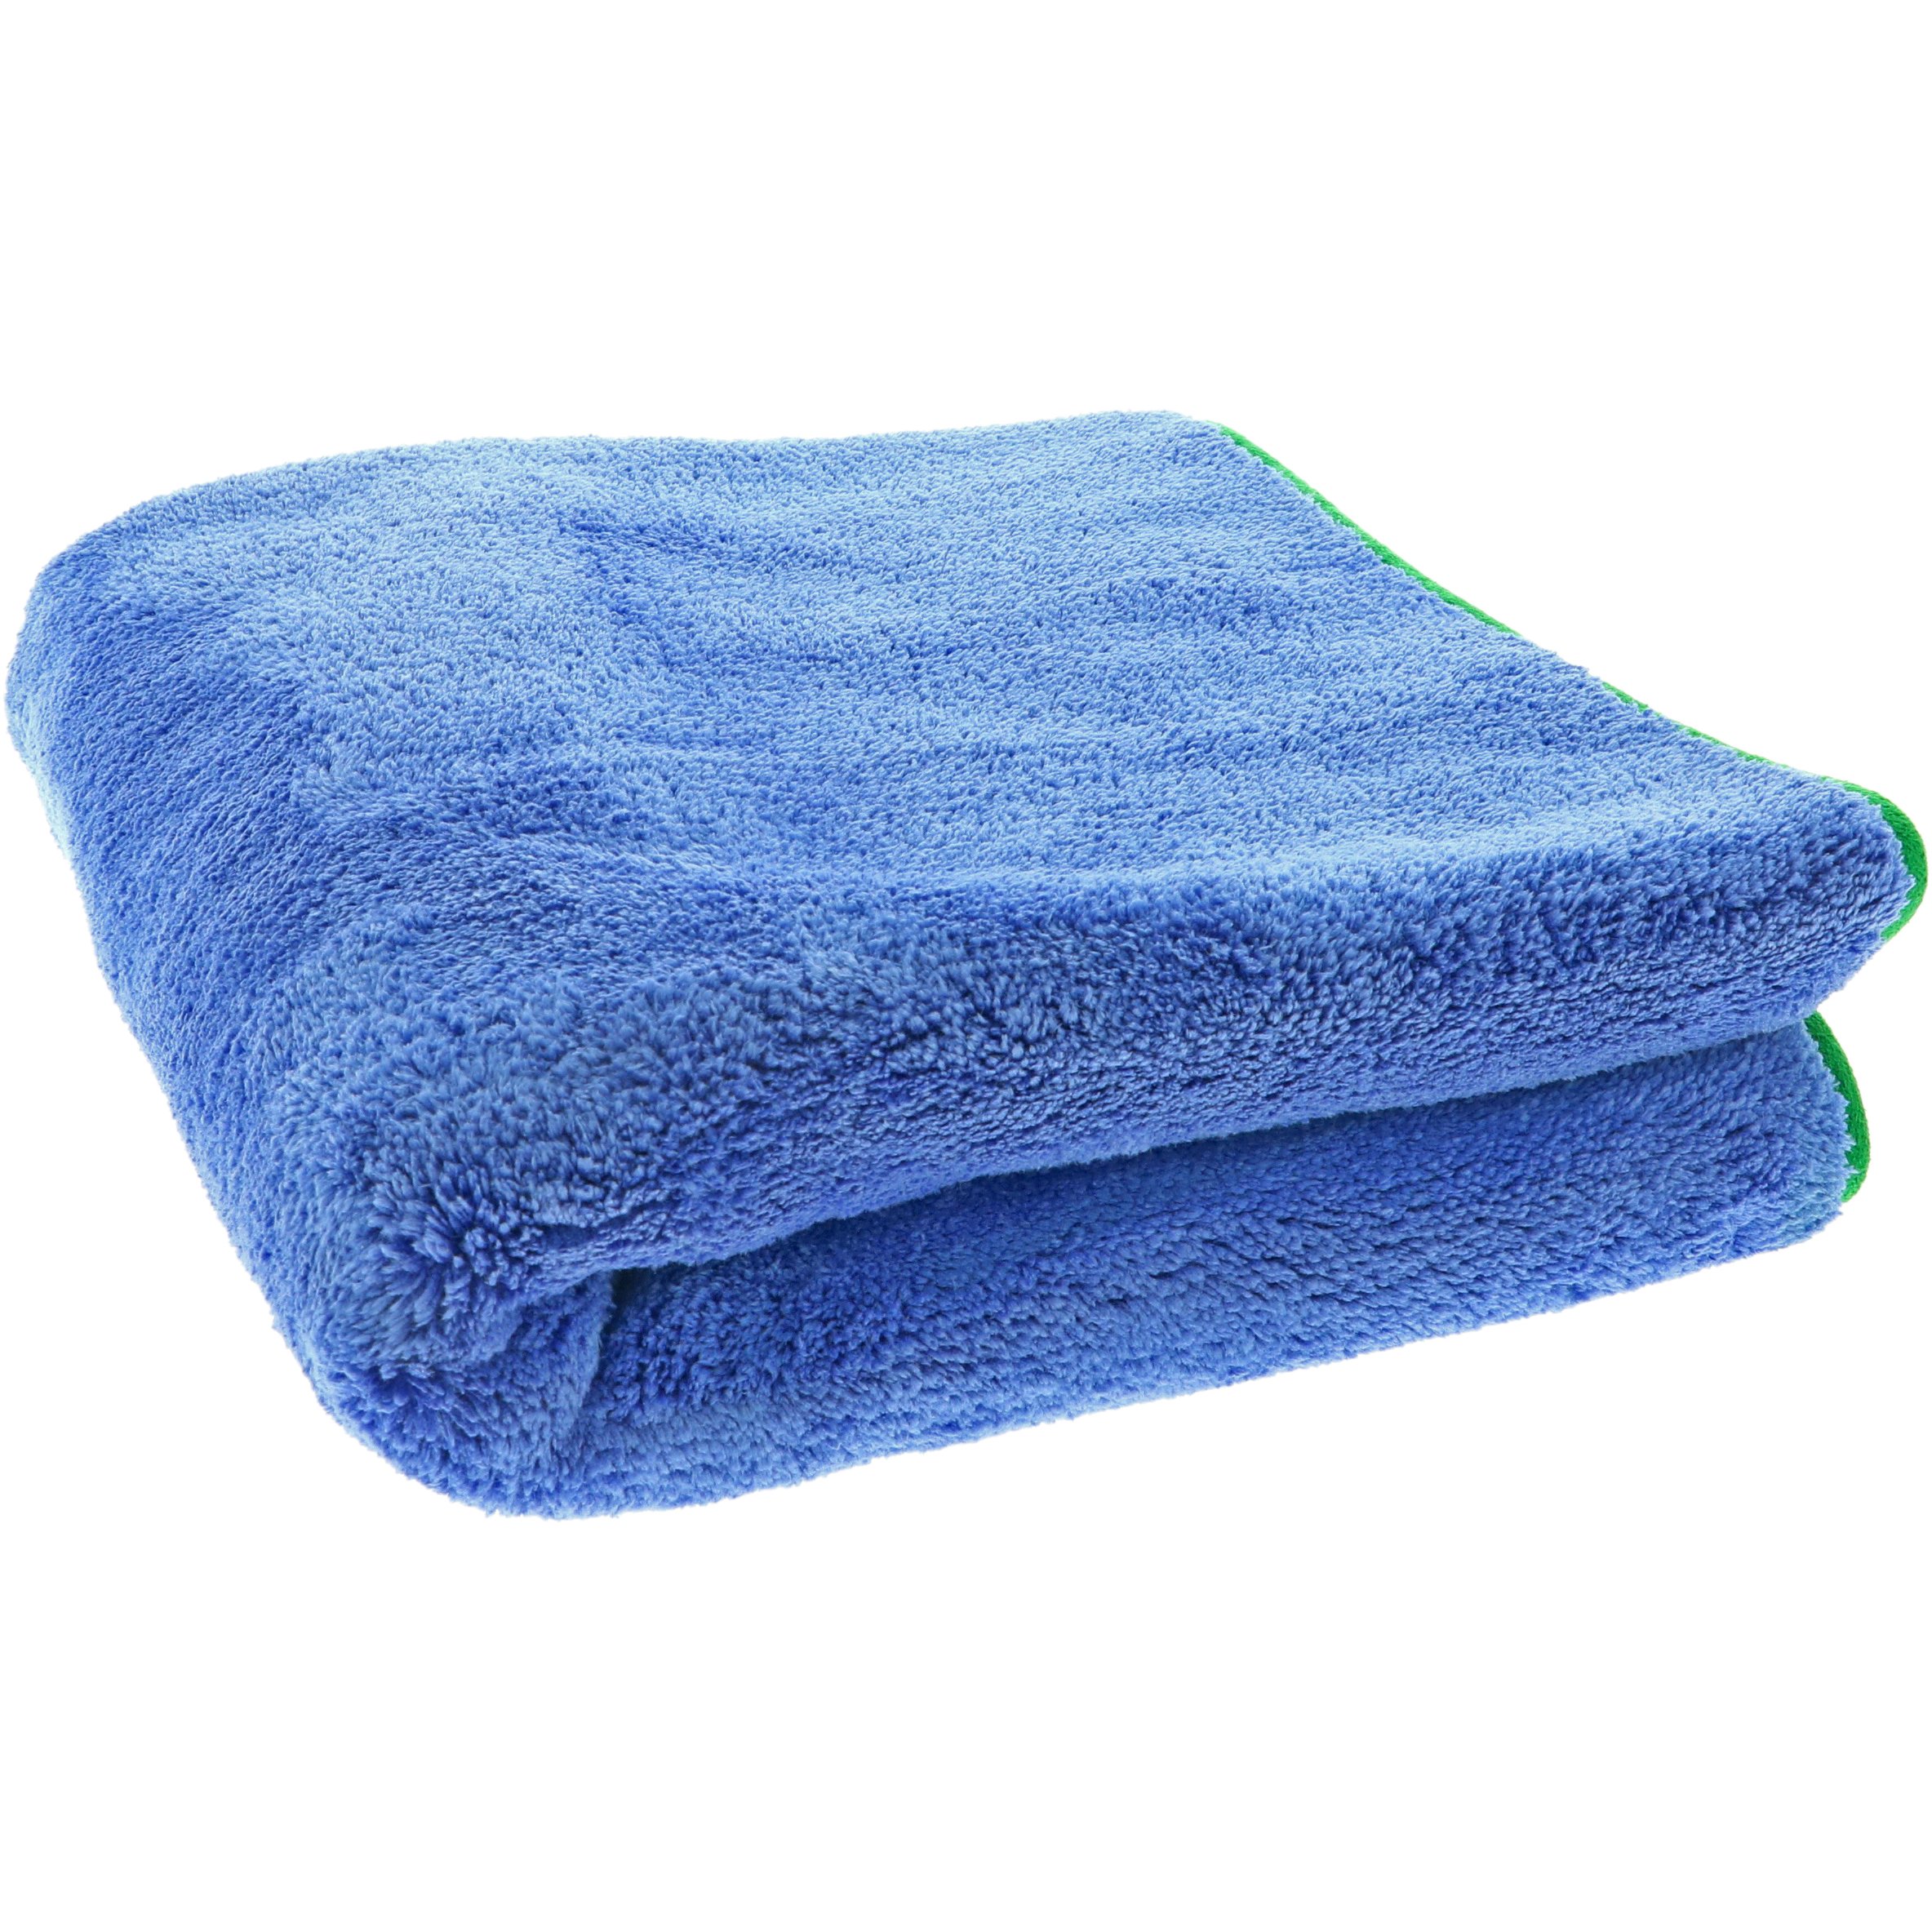 Dryisblue Drying Towel - 80x50cm